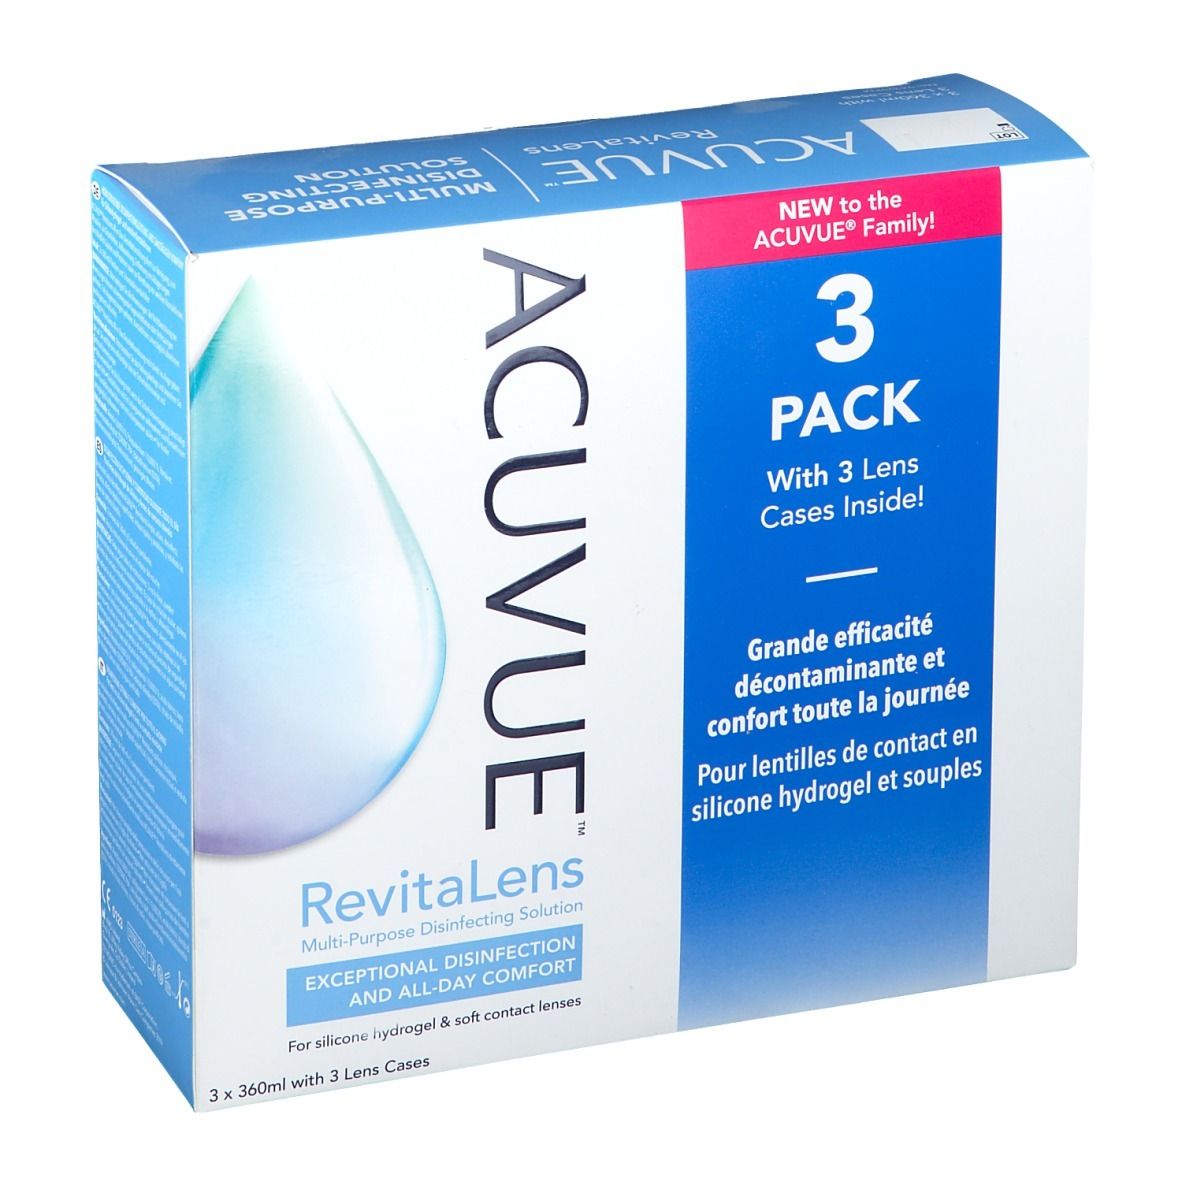 LENSFACTORY Acuvue™ RevitaLens Trio + 3 Lense Cases